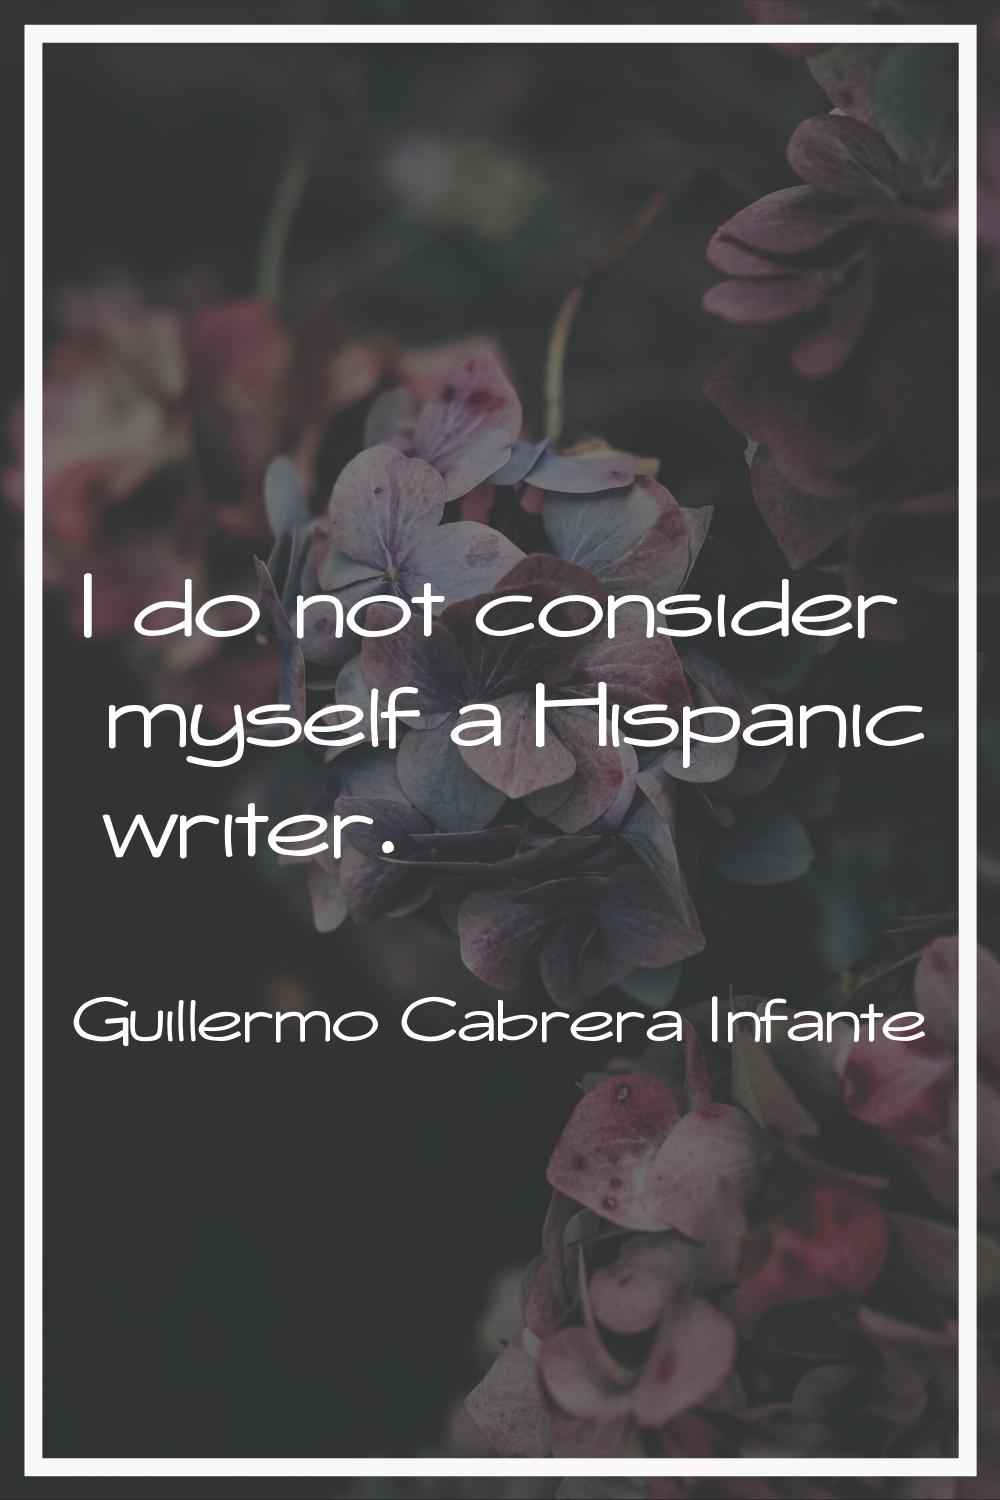 I do not consider myself a Hispanic writer.